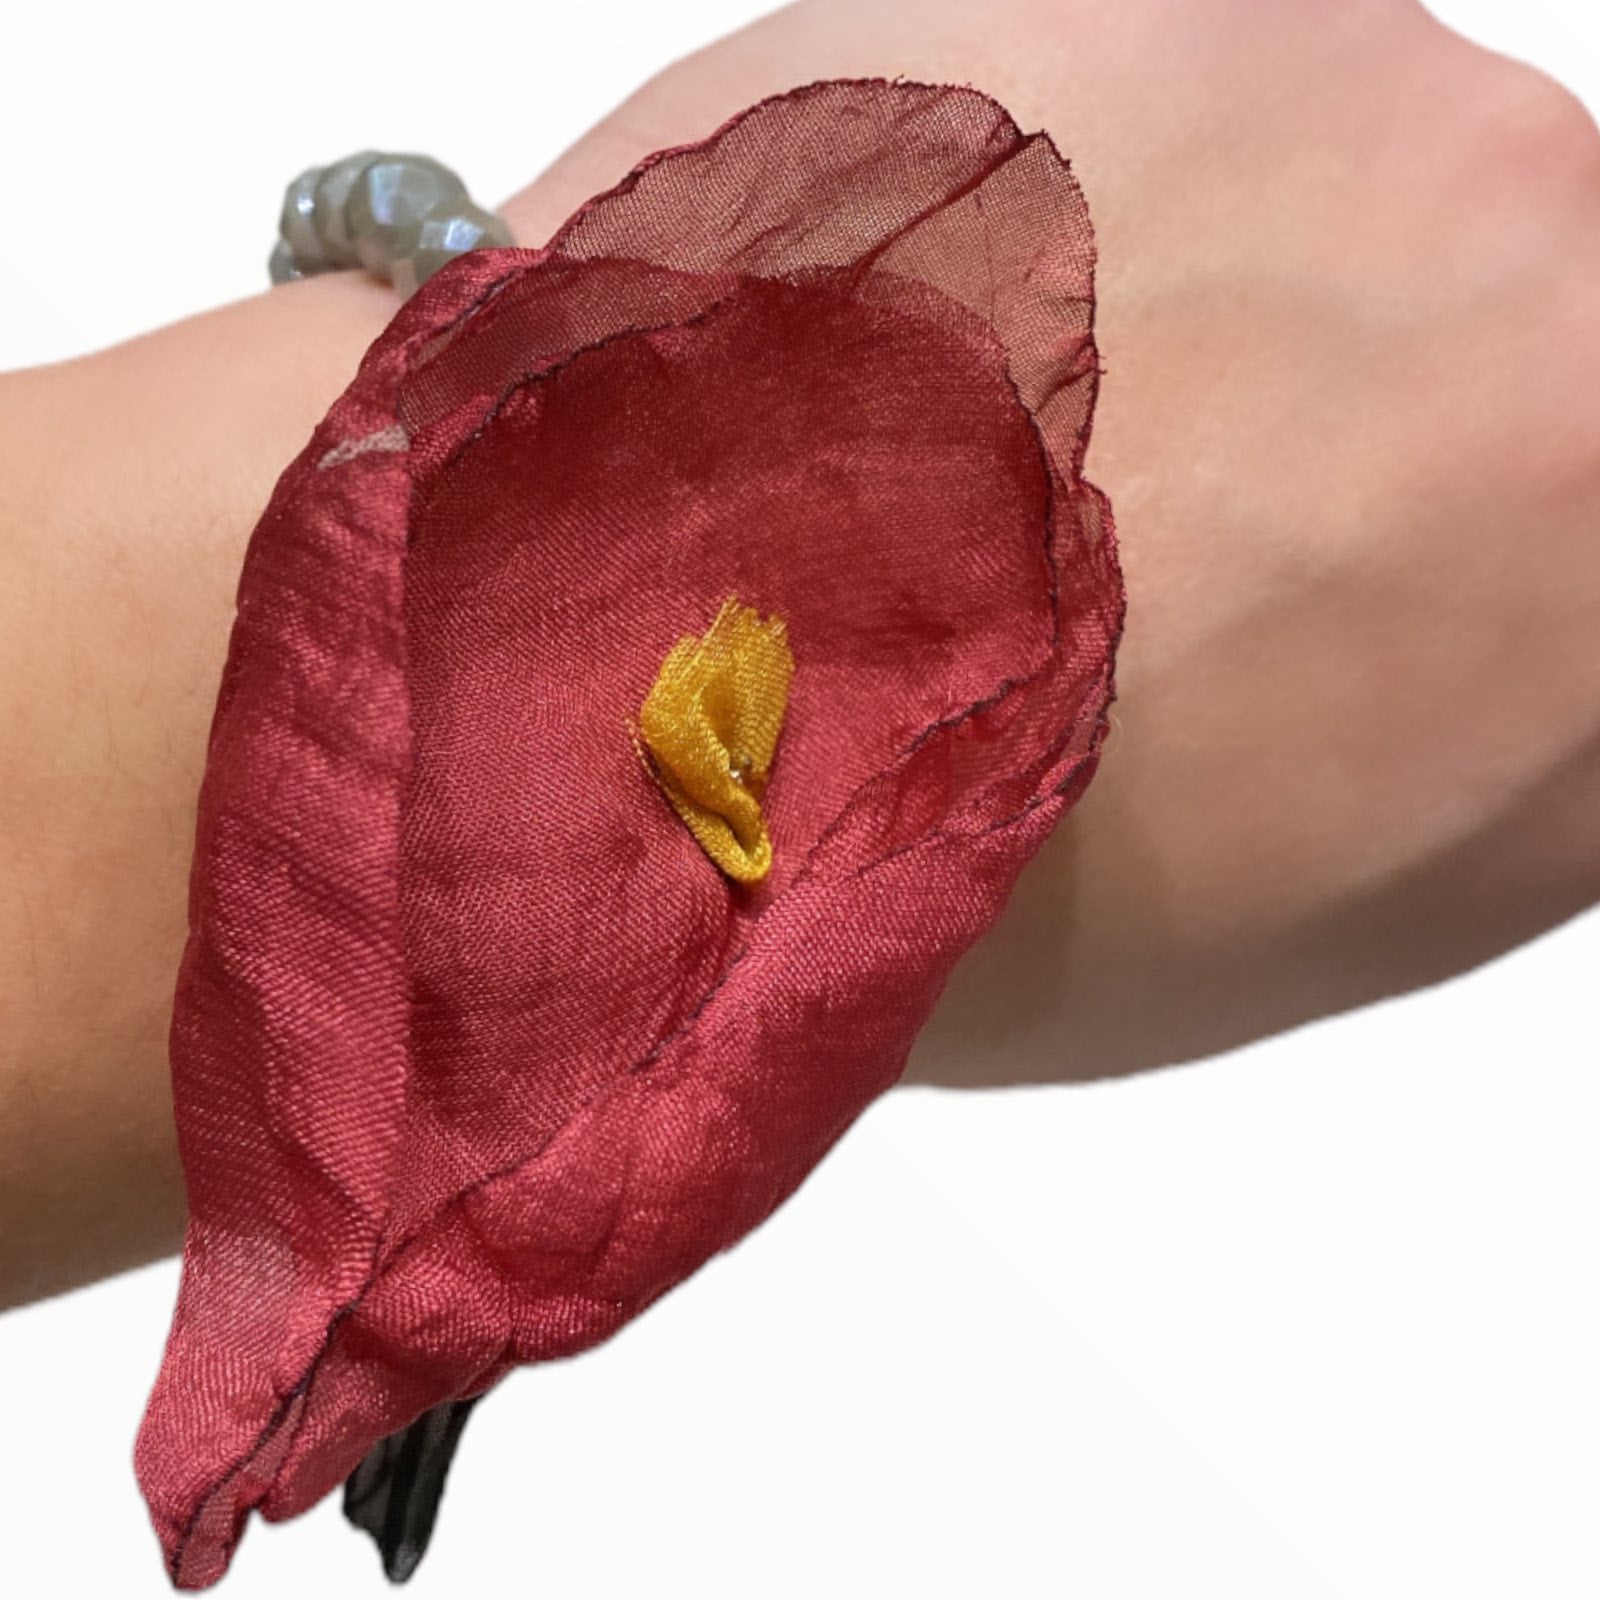 Grey bracelet with red flower